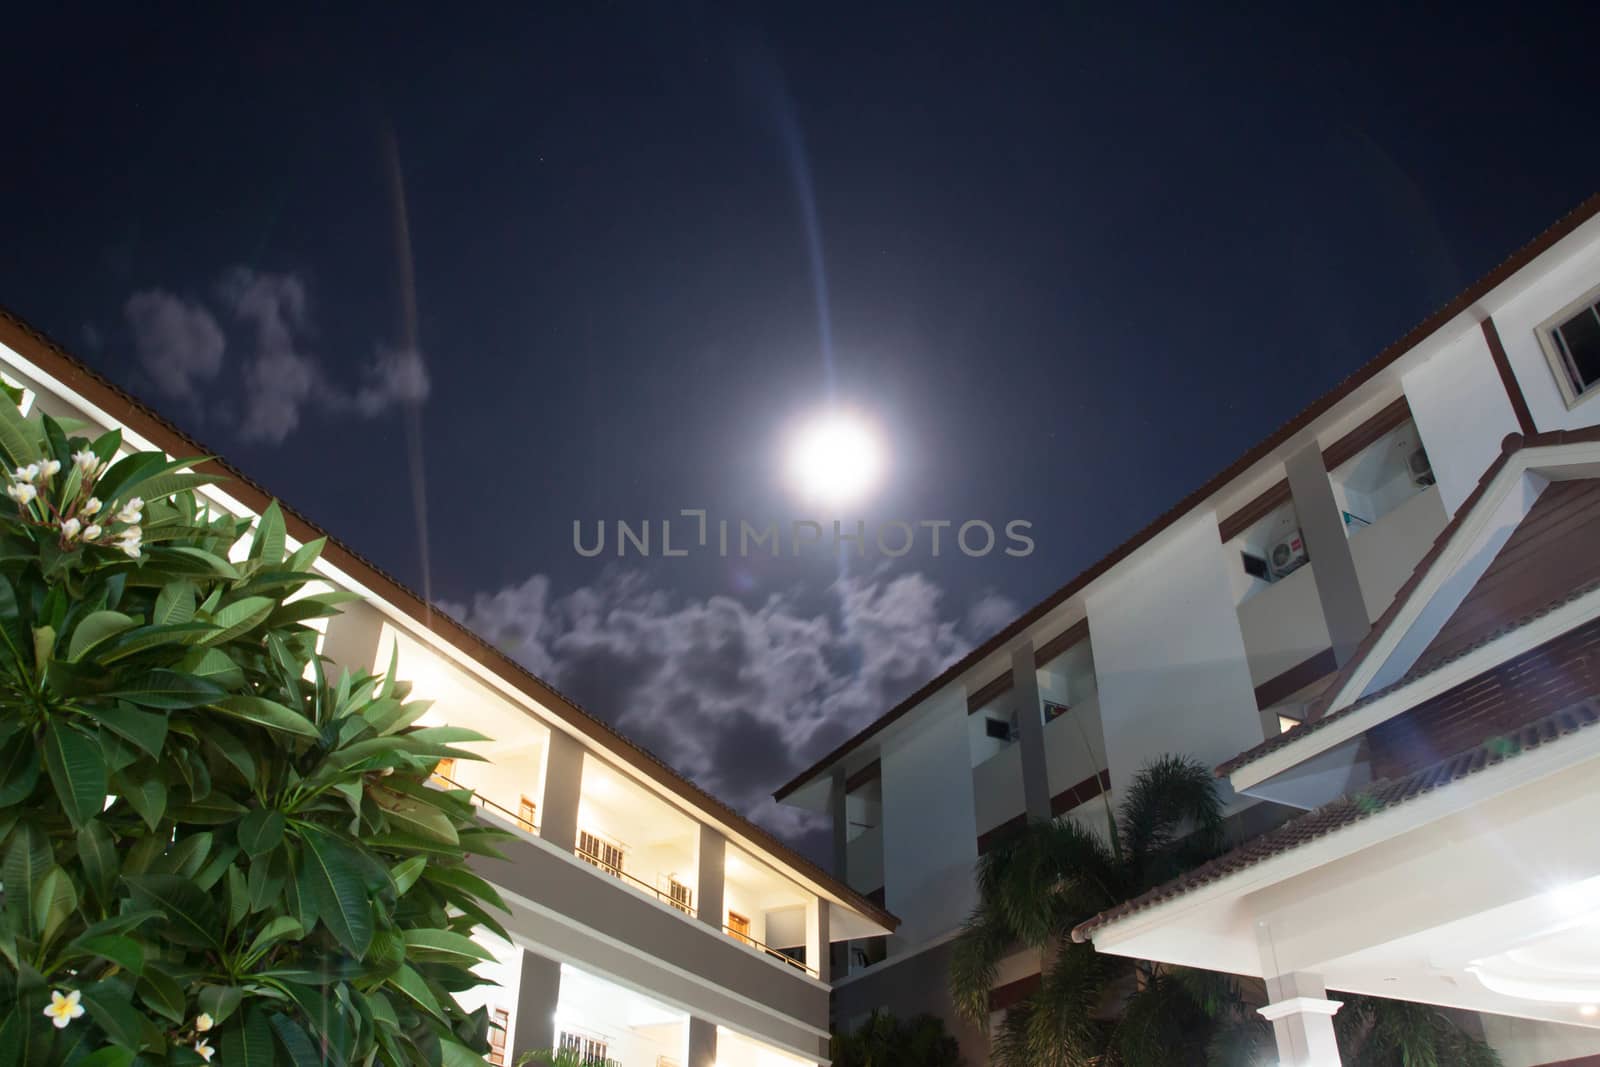 Moon light shone on the housing.
Thailand